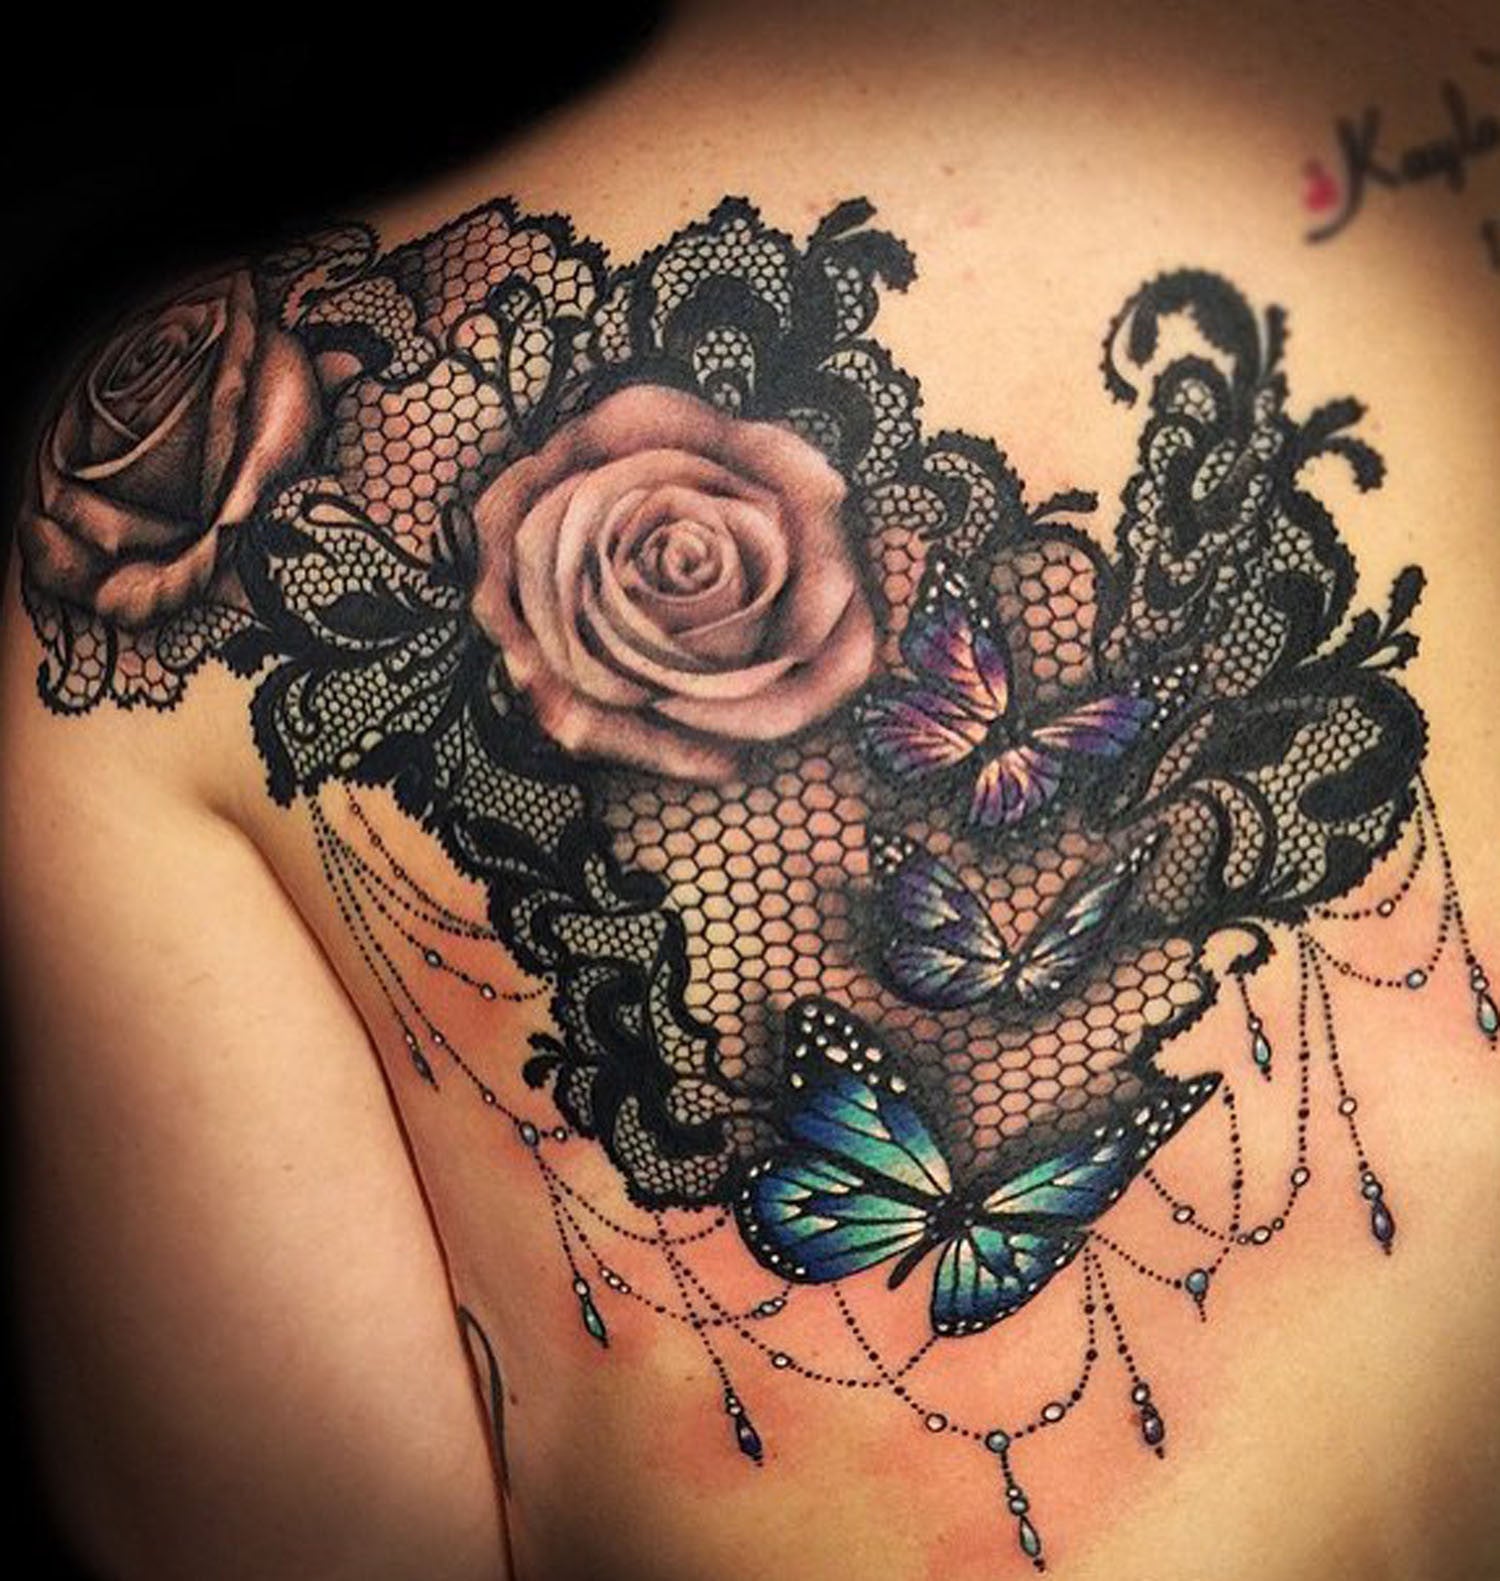 Rose Shoulder Tattoo Ideas with Black Henna Lace Chandelier at MyBodiArt.com - Floral Flower Tatt